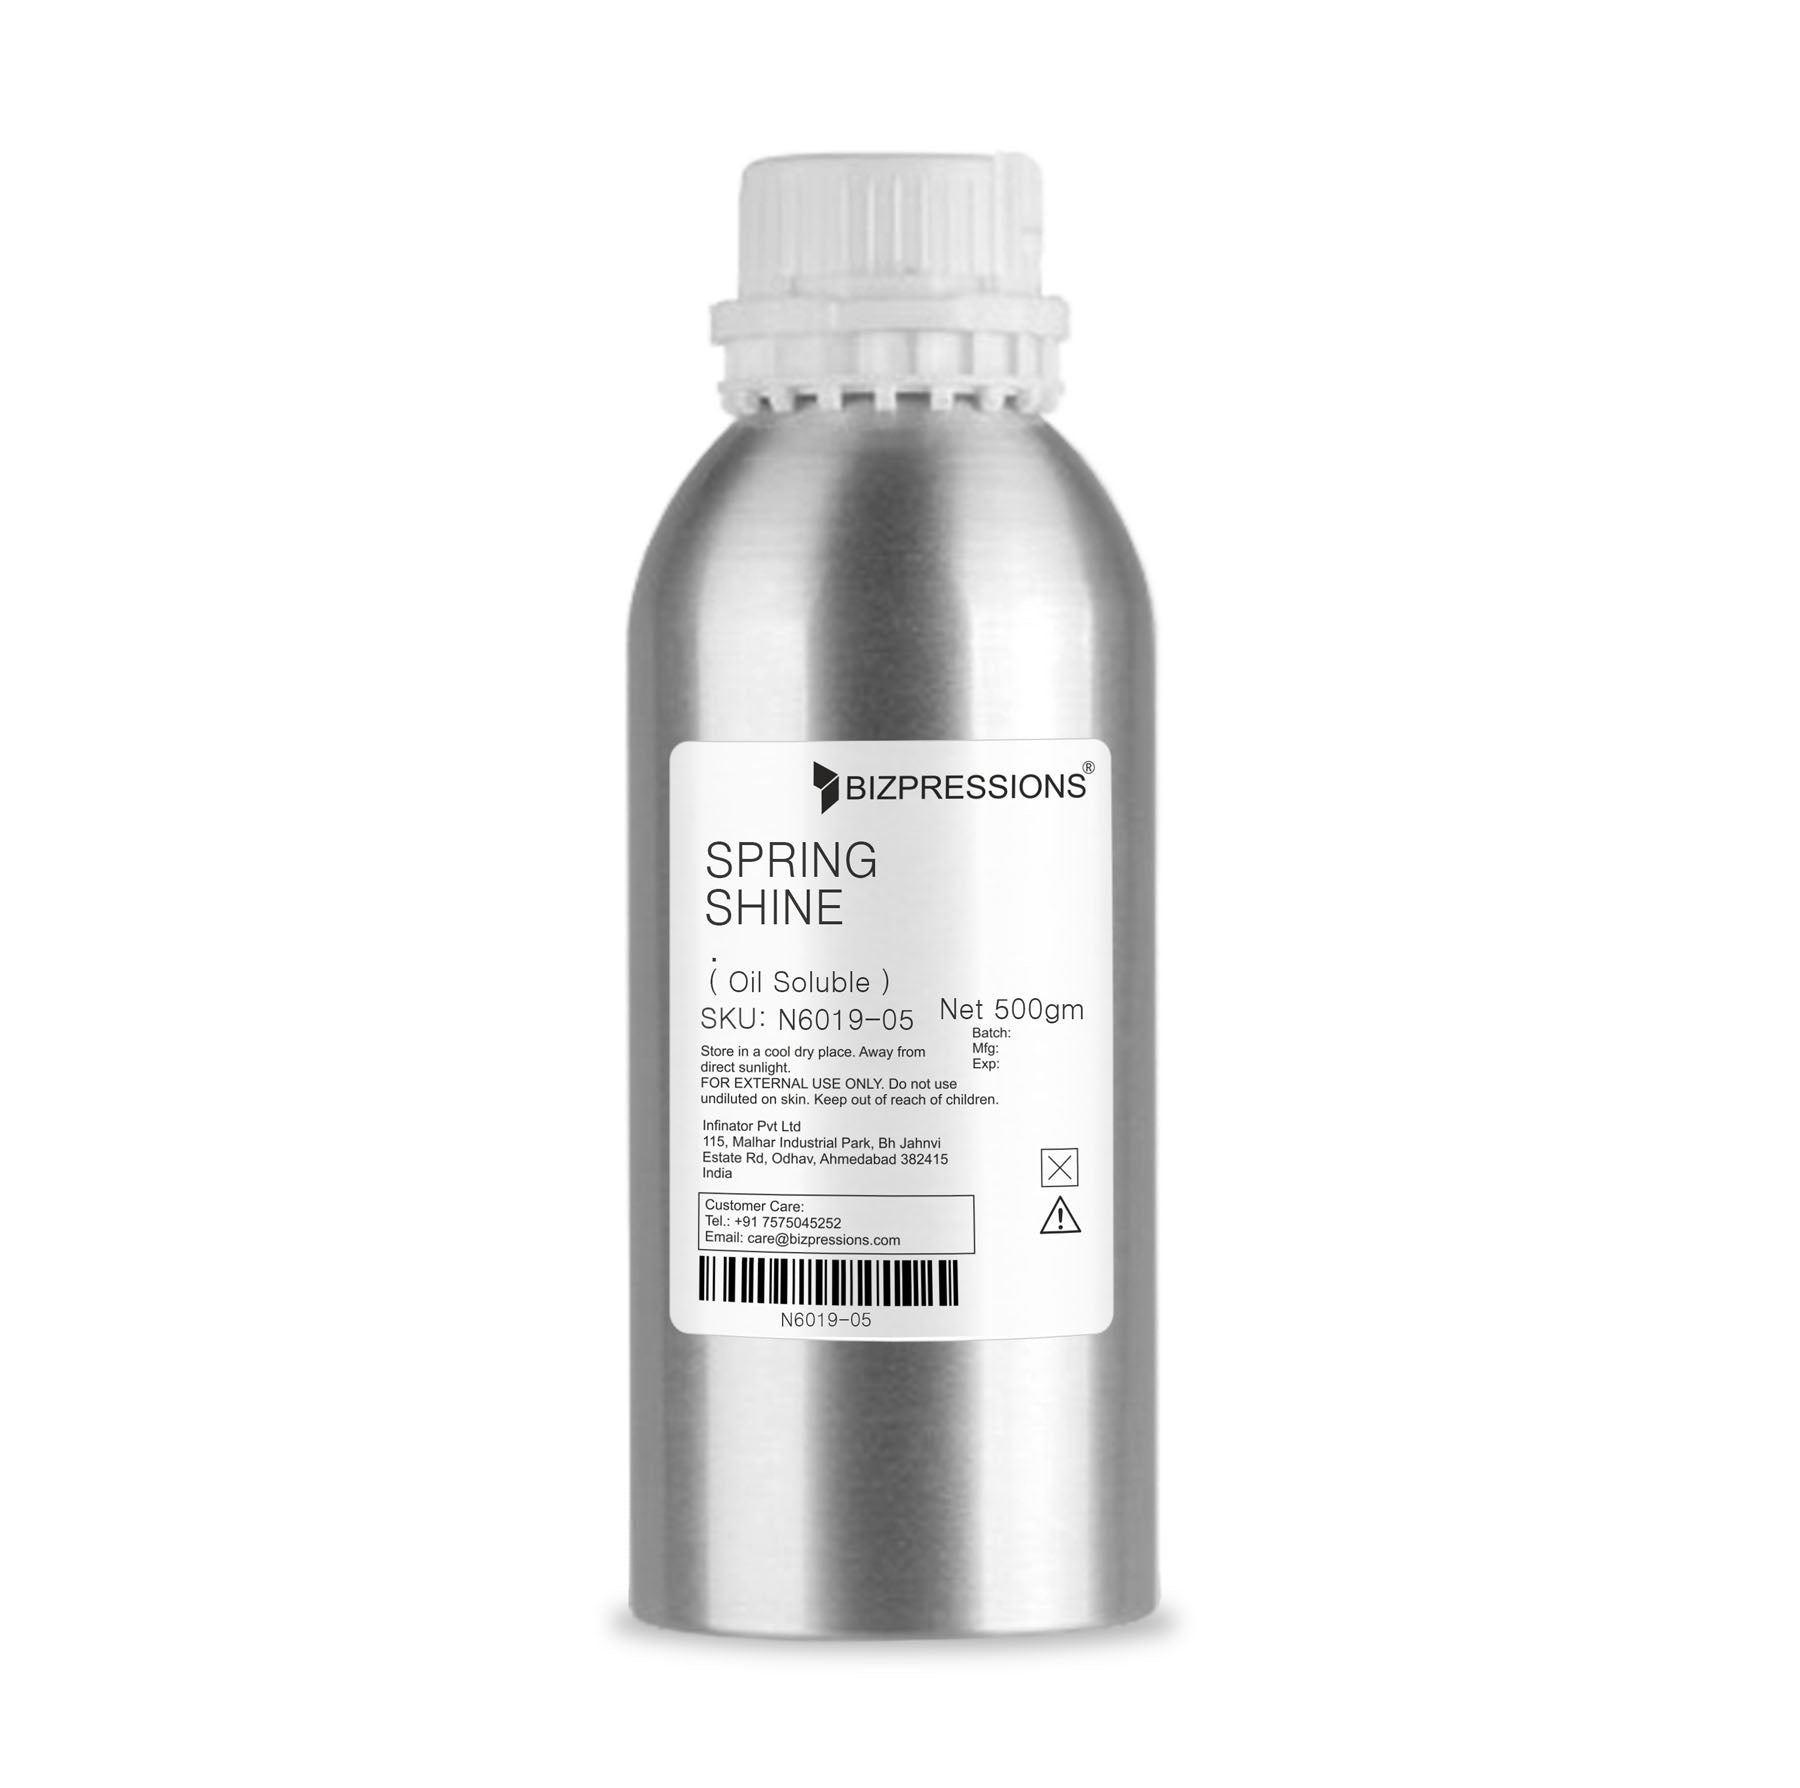 SPRING SHINE - Fragrance ( Oil Soluble ) - 500 gm